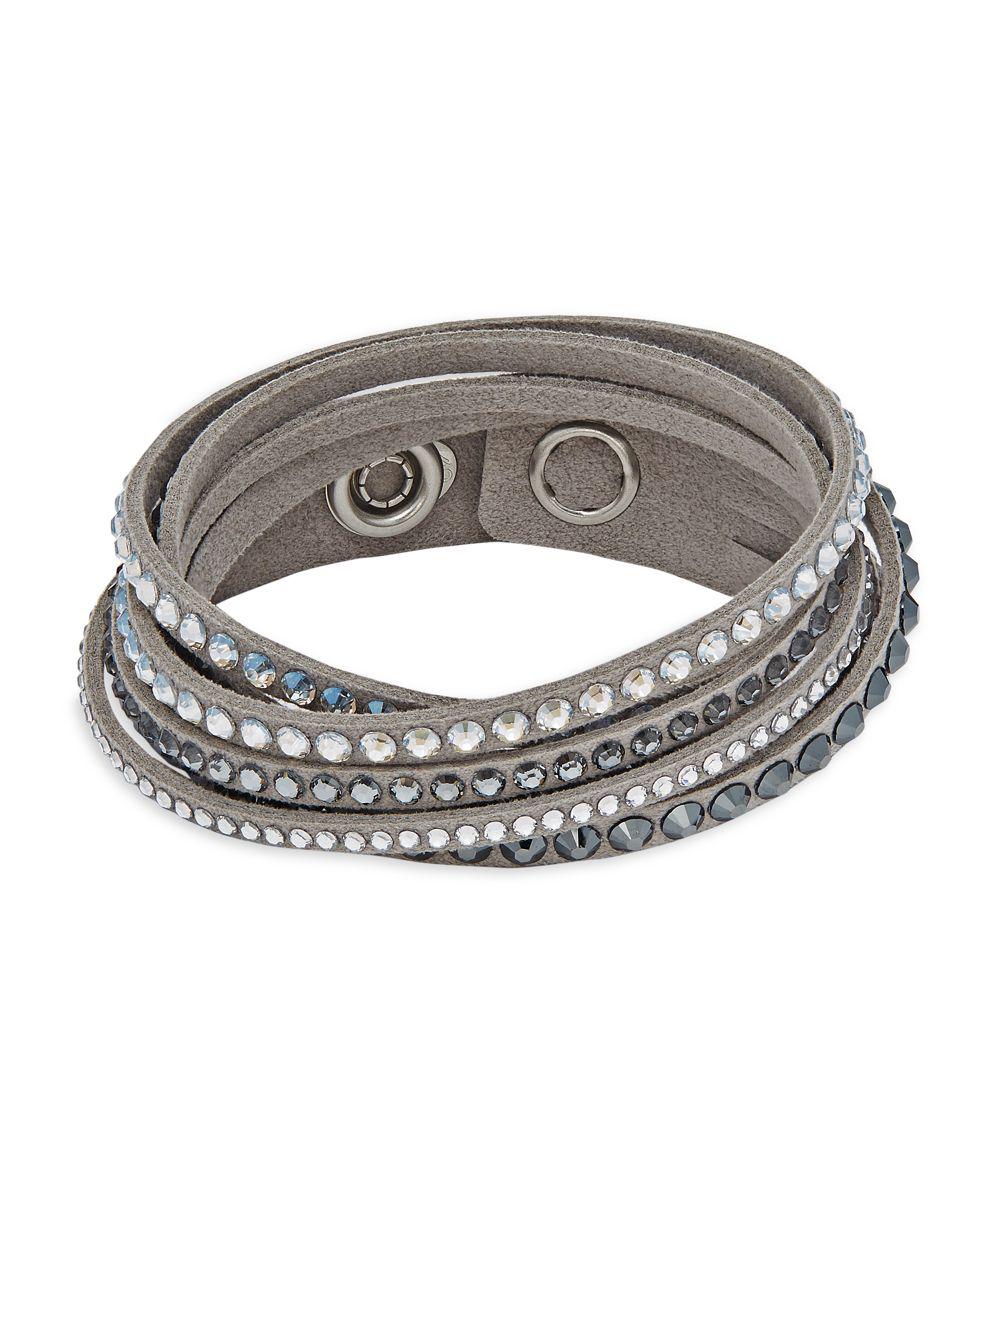 Pave Crystal Adjustable Suede Double Wrap Slake Bracelet in Black & White 